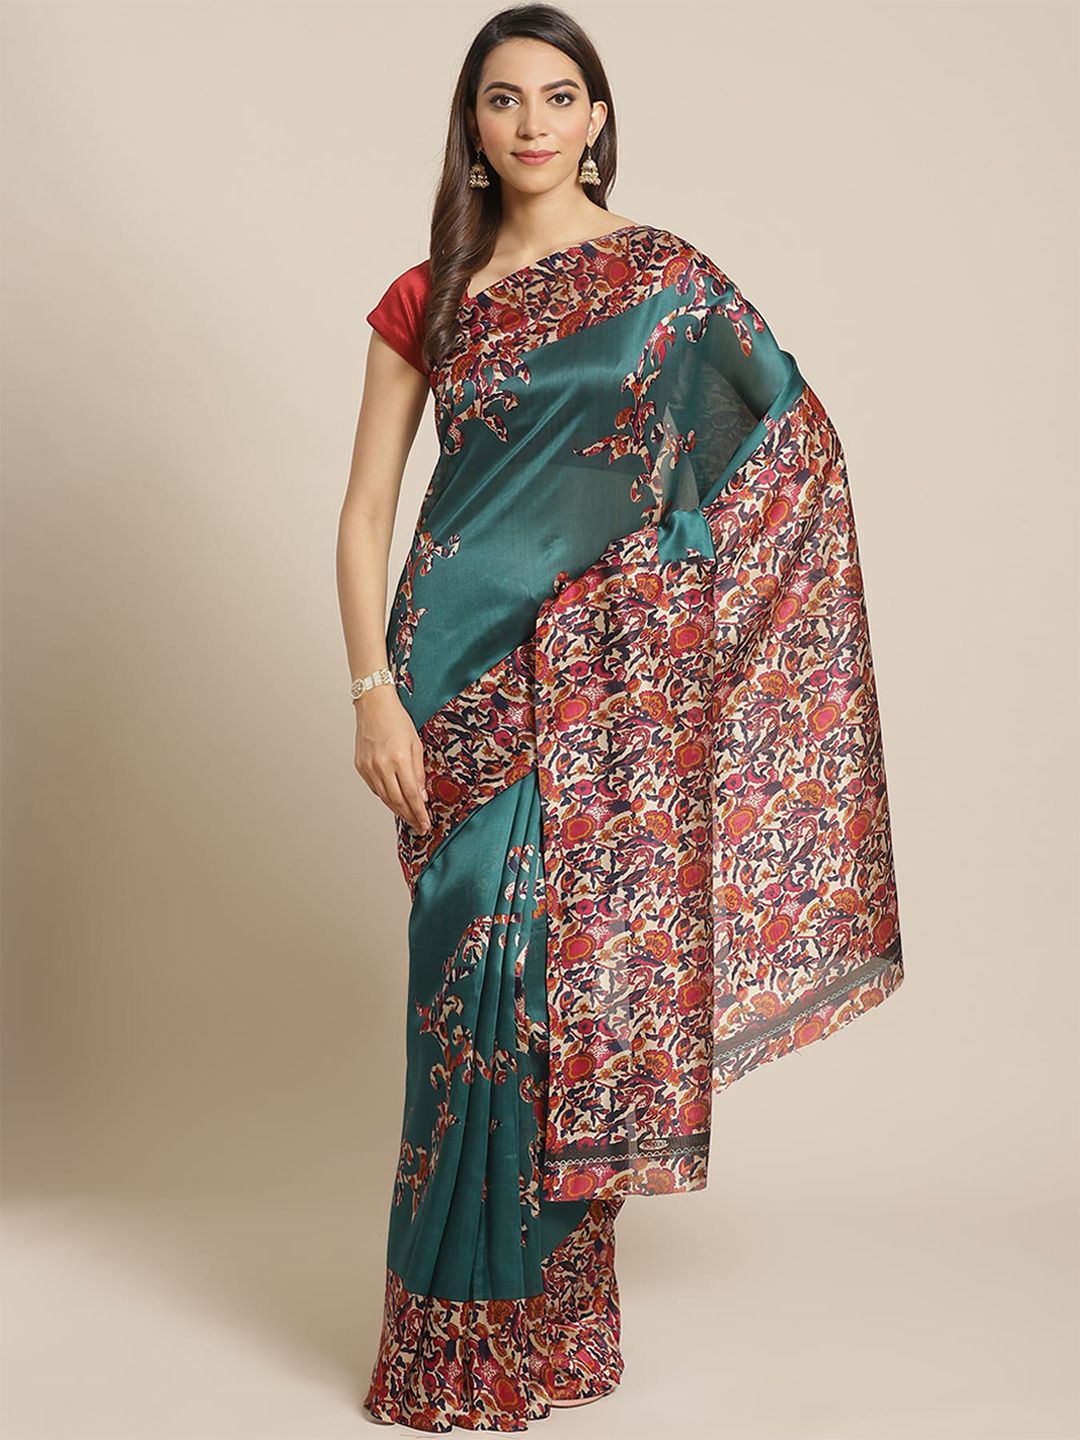 KALINI Floral Printed Banarasi Saree Price in India